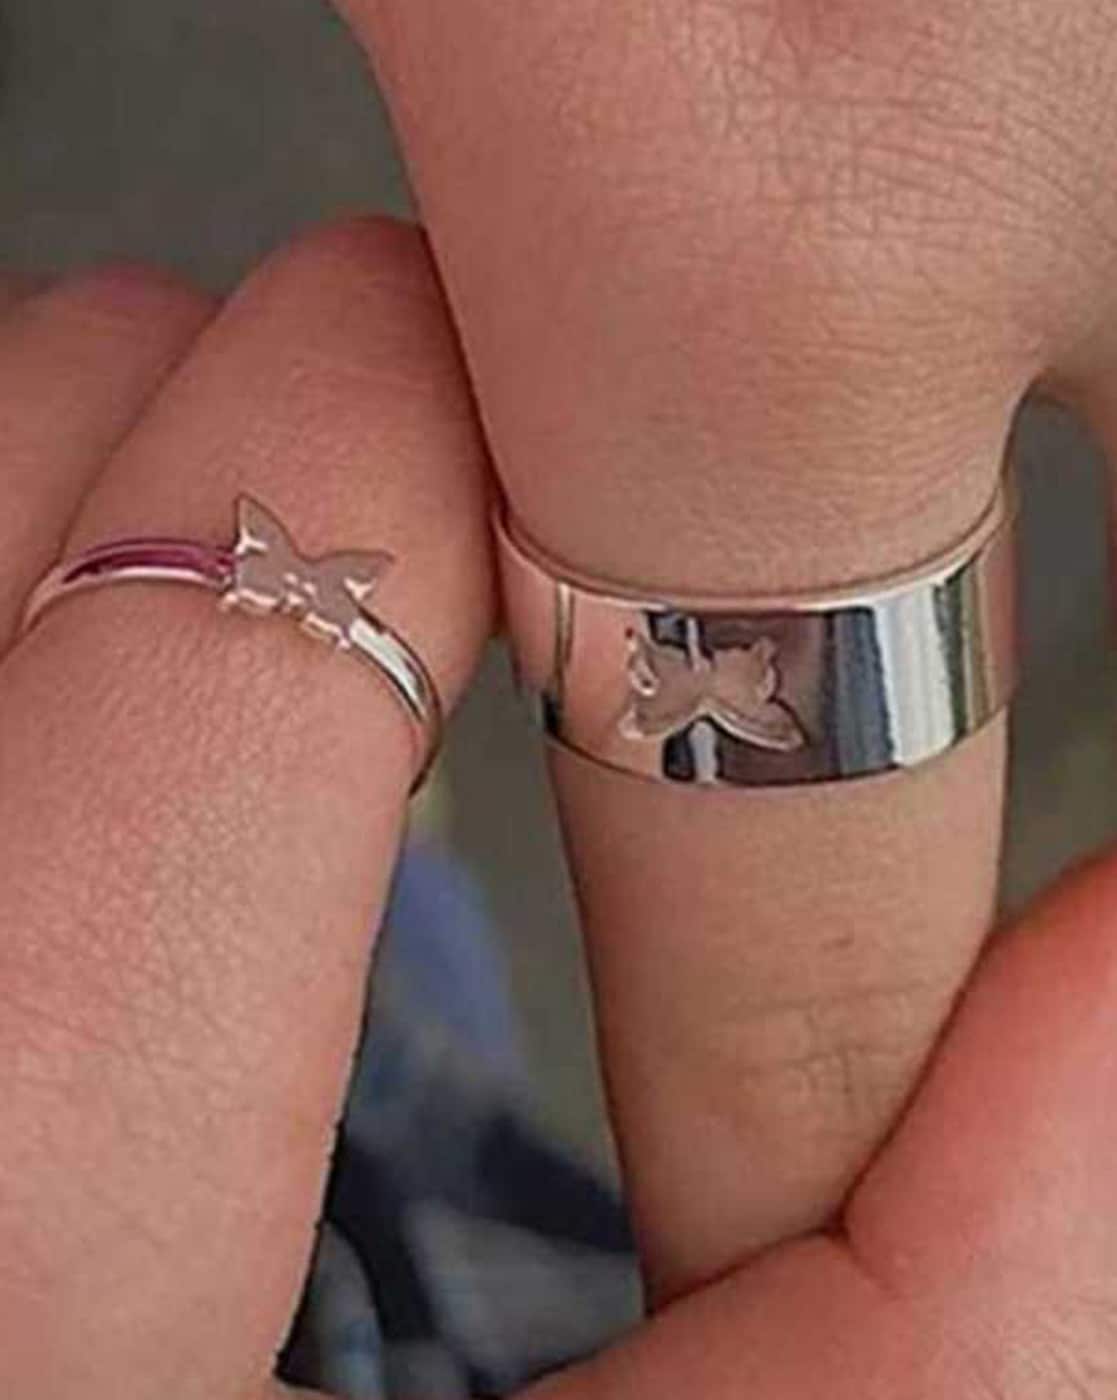 Sterling Silver Zircon Adorned Couple Rings – VOYLLA